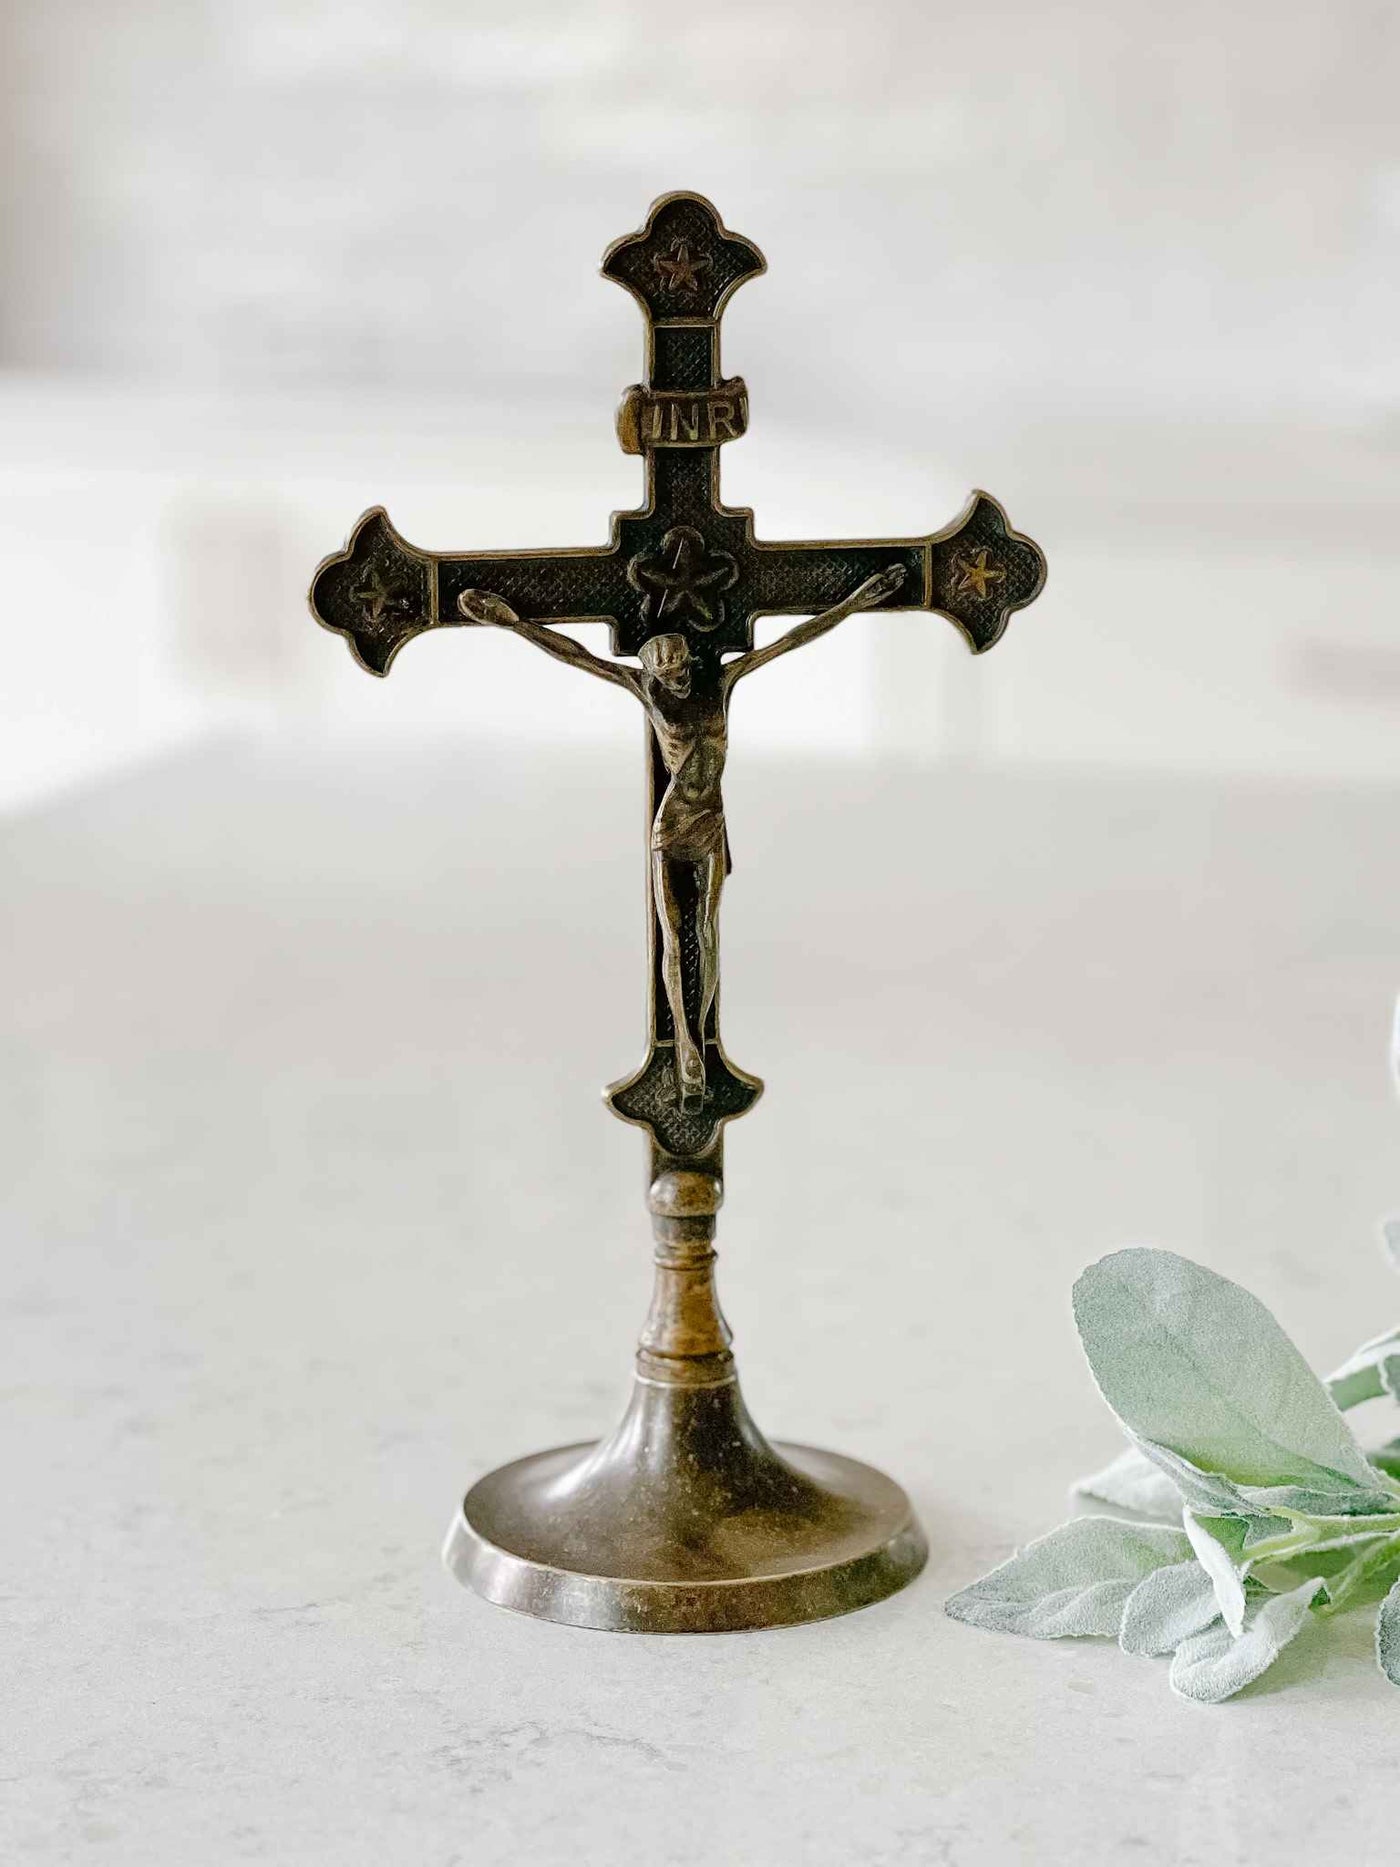 Standing Antiqued Brass Crucifix